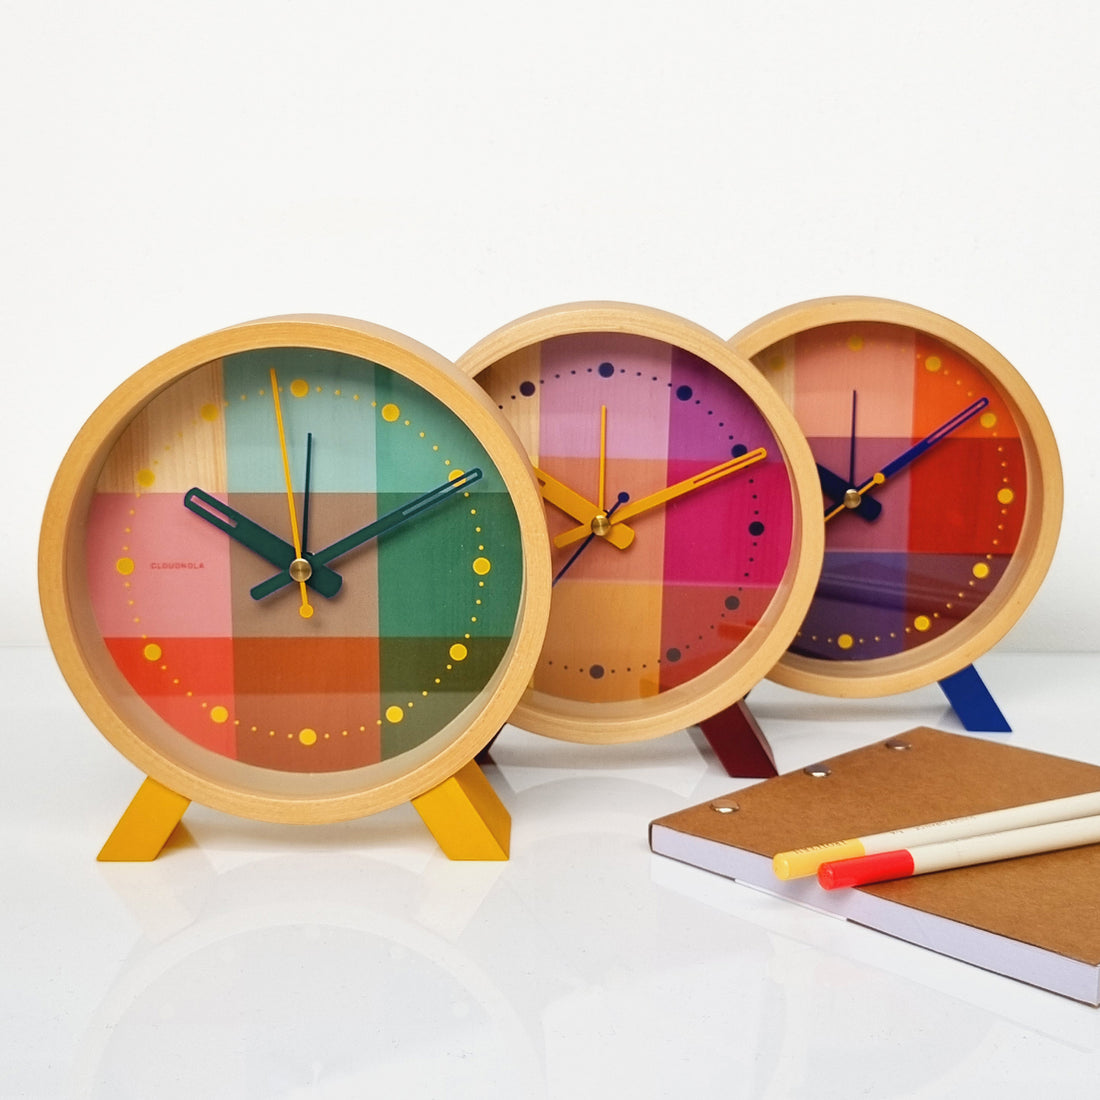 Risograph Inspired Clocks